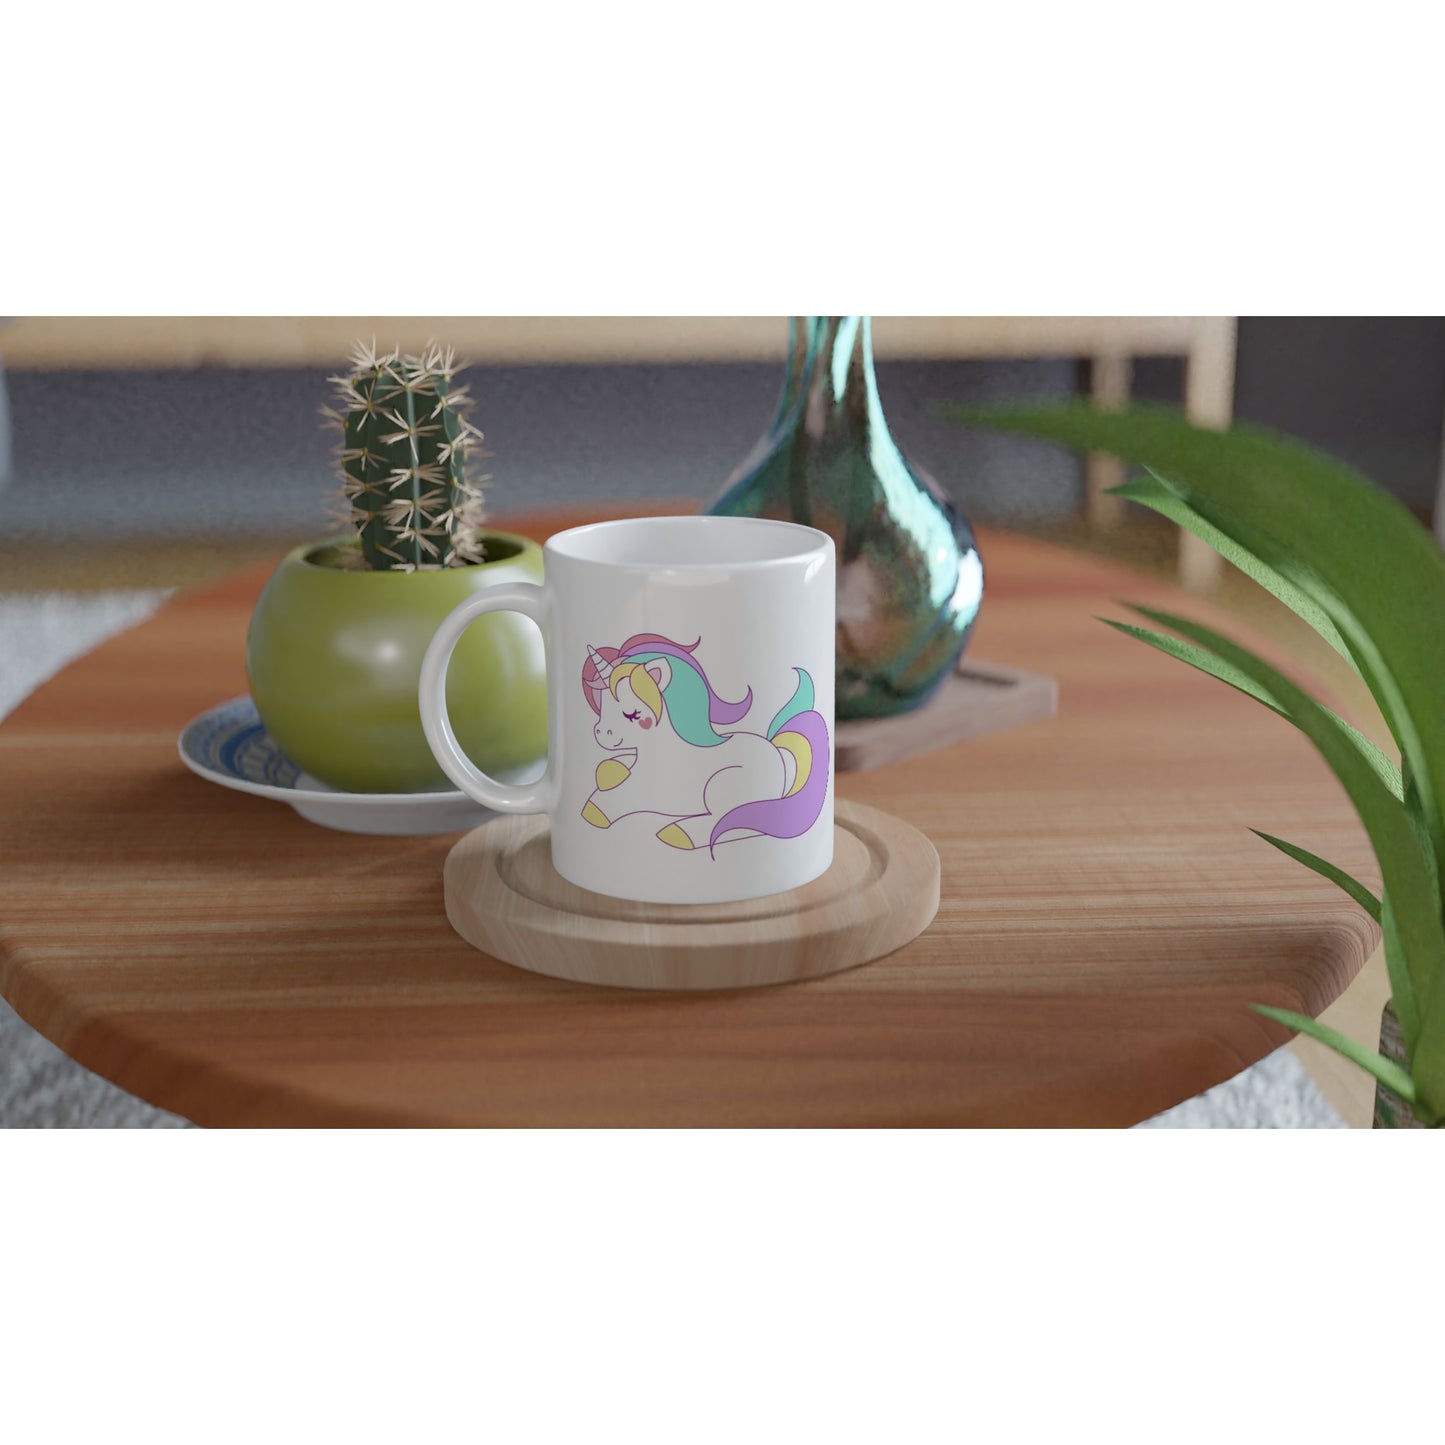 Artwork Mug - Unicorn Artwork Number 1 - White Ceramic Mug 330ml